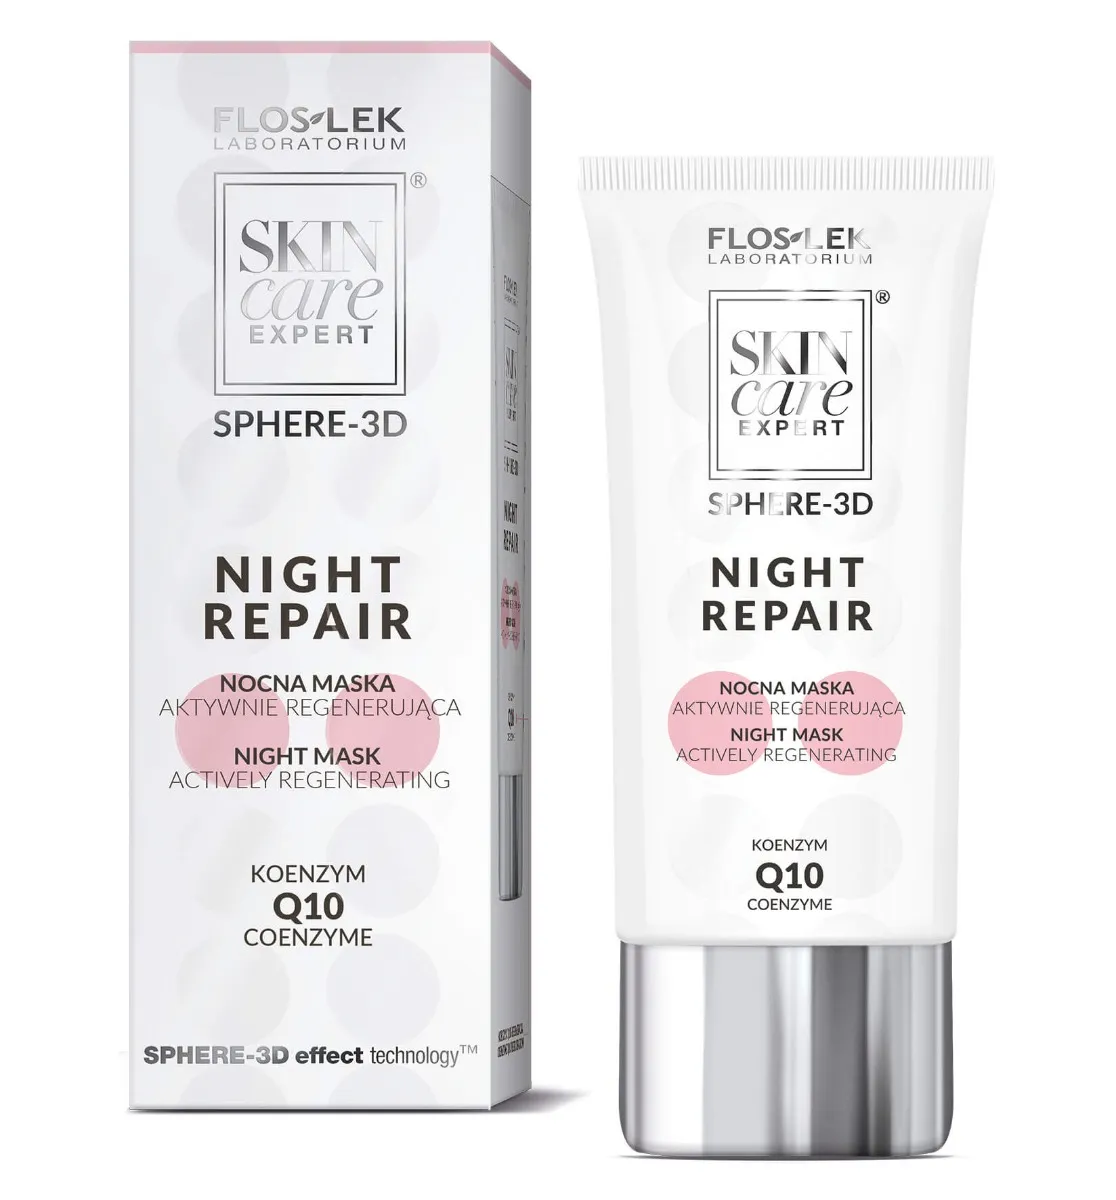 Flos-Lek Skin Care Expert Sphere 3D, Night Repair, nocna maska aktywnie regenerująca z koenzymem Q10, 50 ml